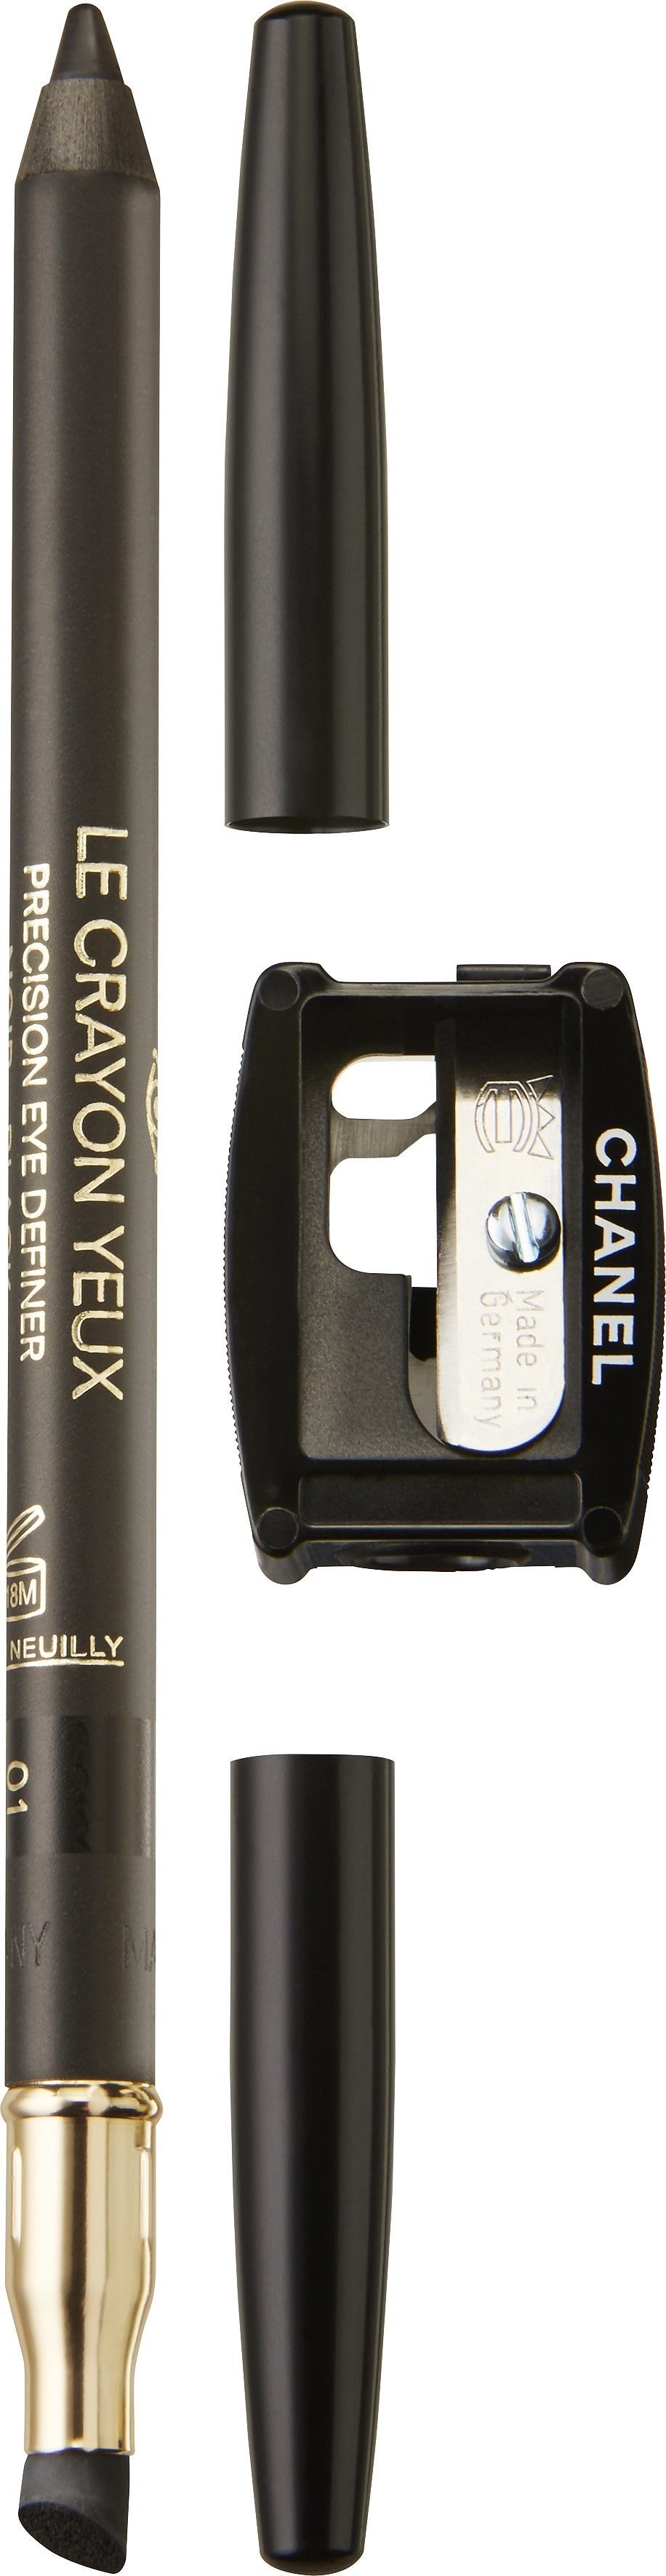 Chanel Le Crayon Yeux kaufen » ab € 24,99